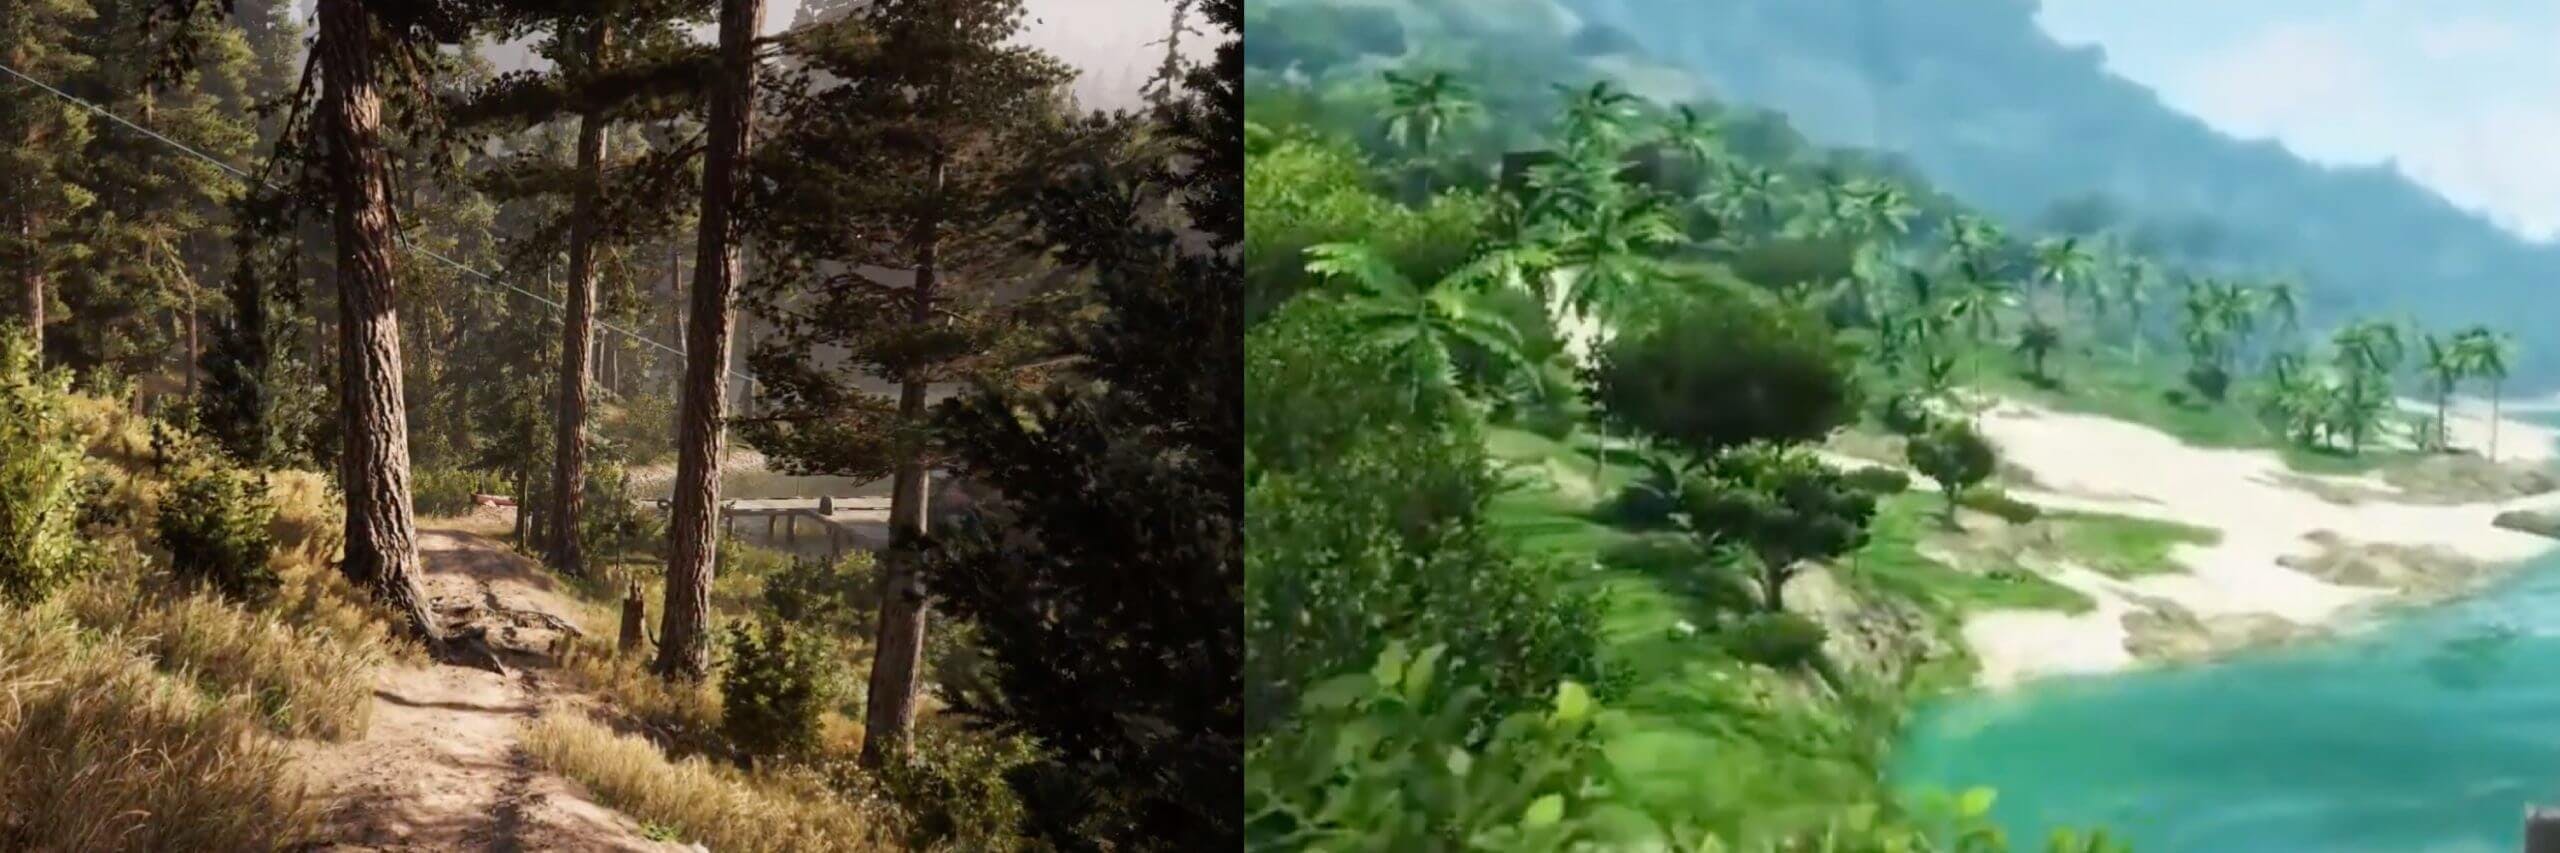 Far Cry games - environments